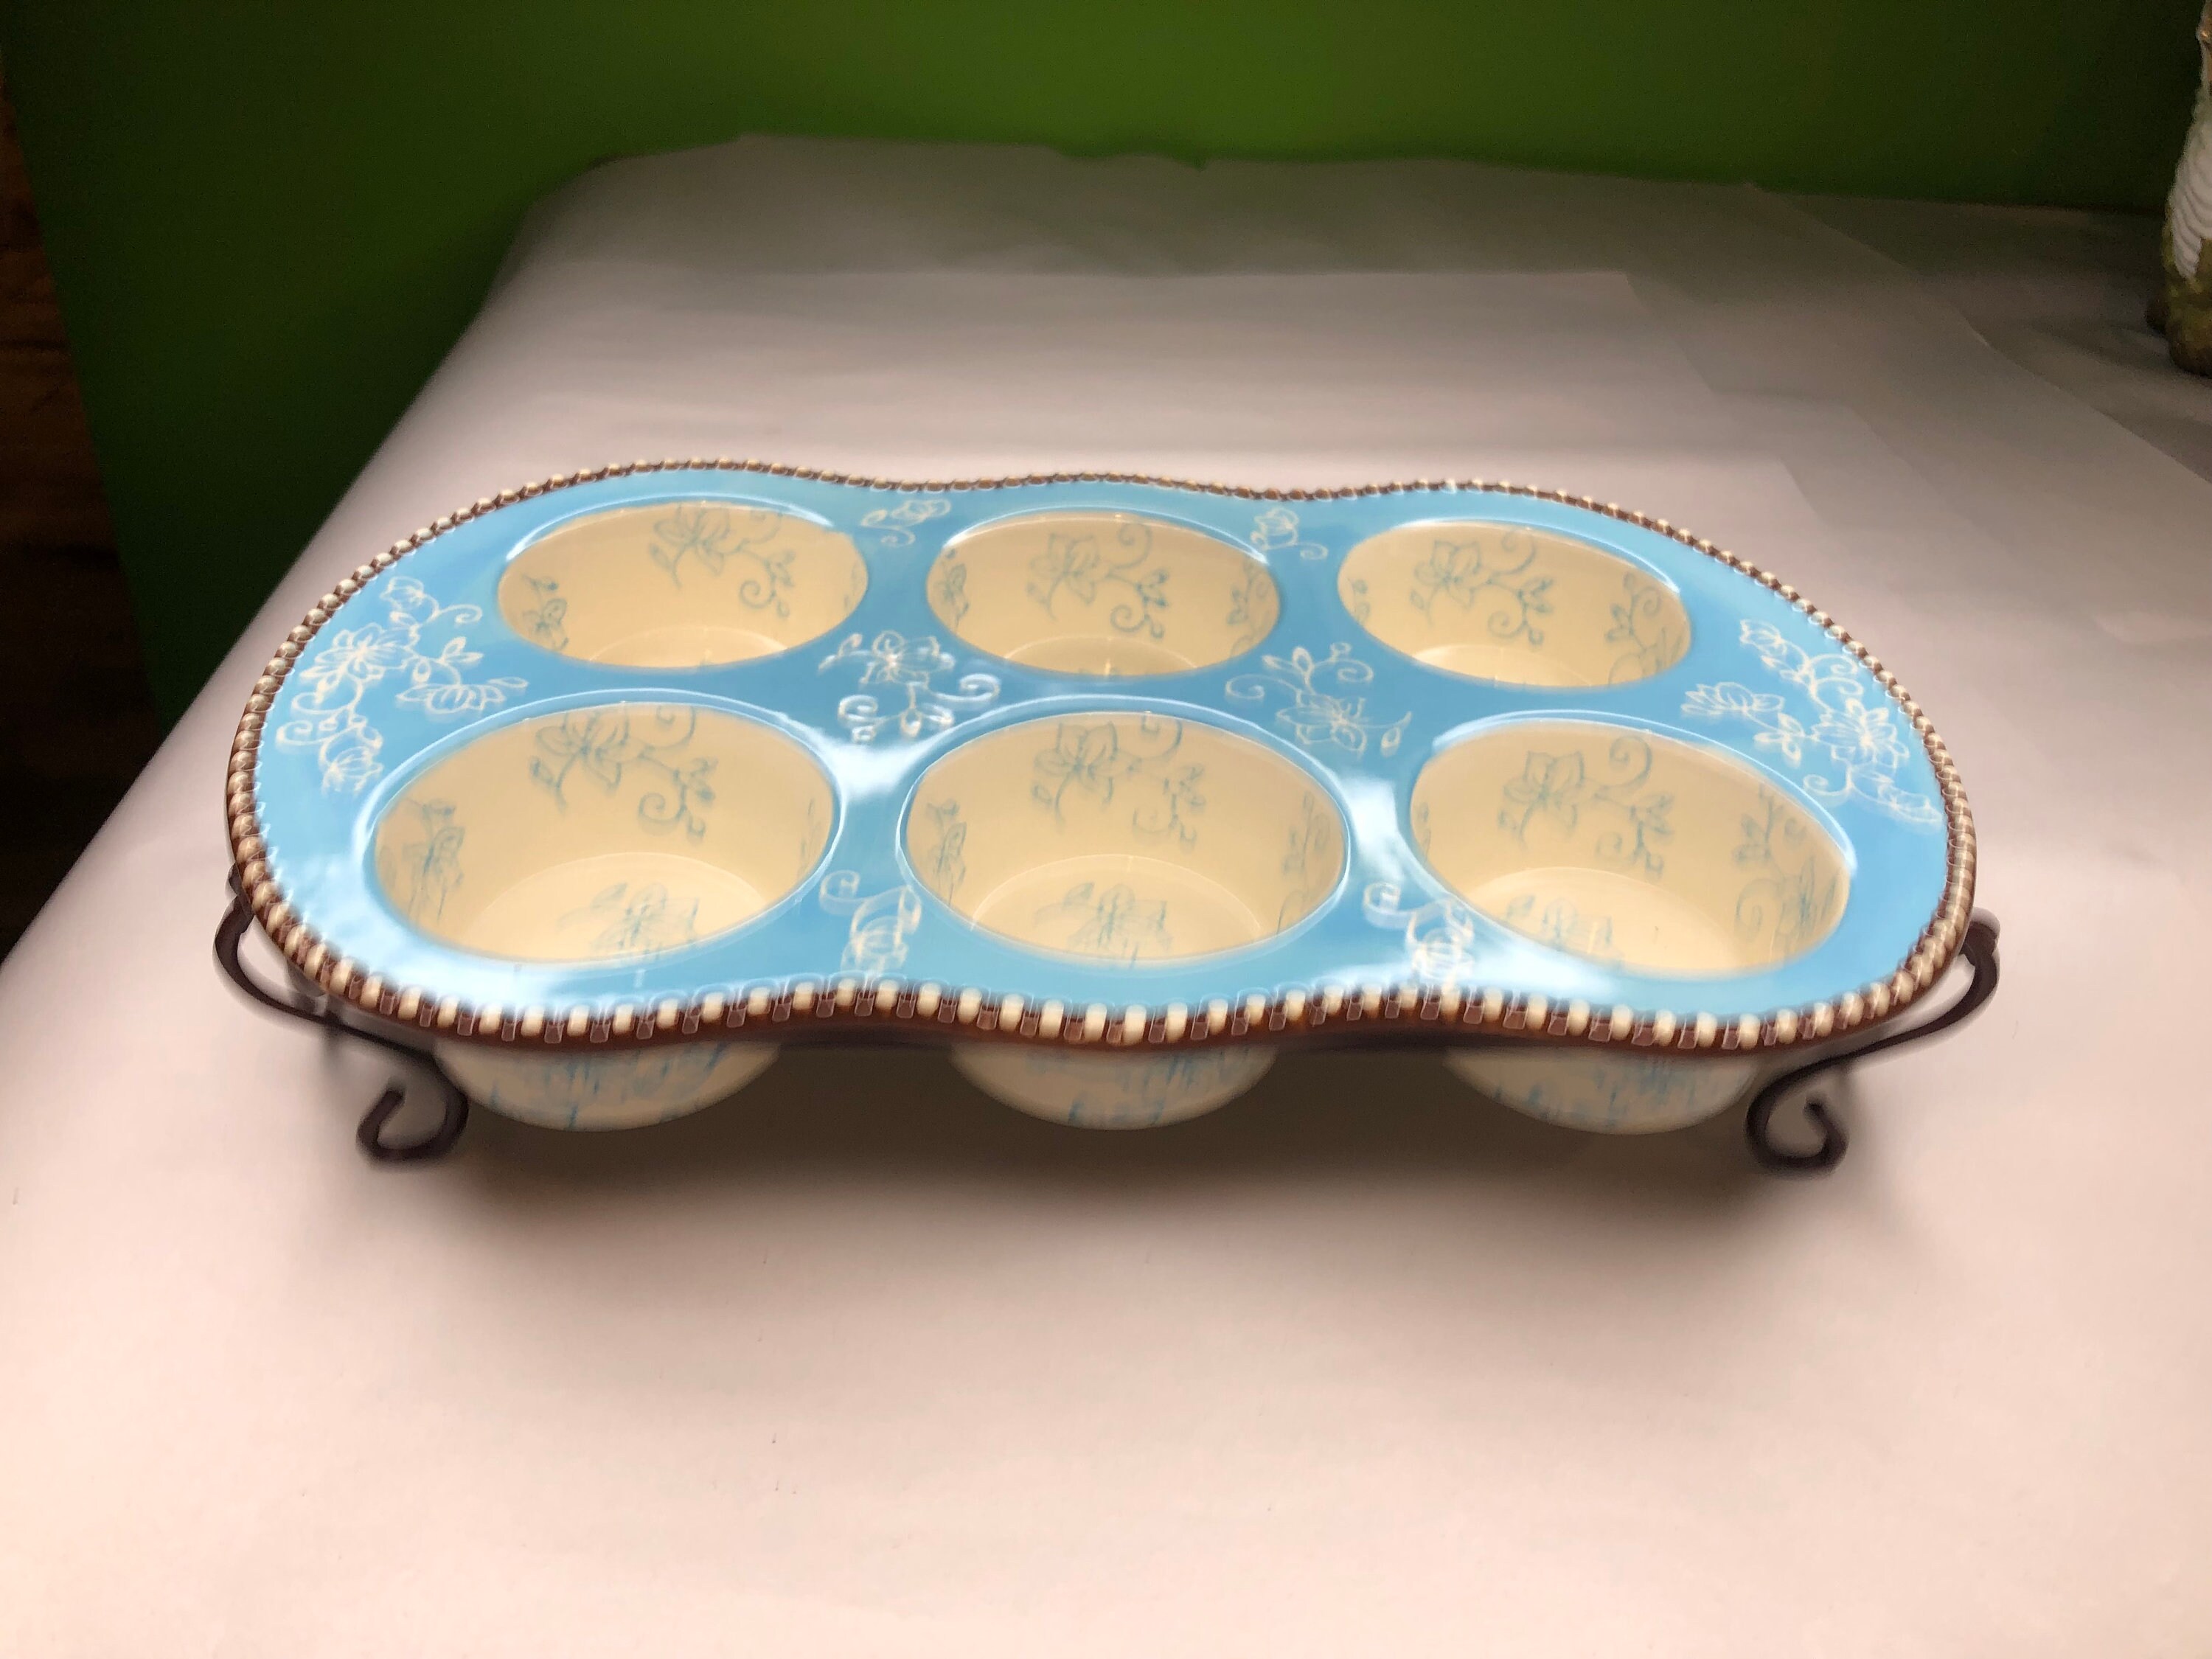 Temptations by Tara Old World Ceramic 6 Cupcake Muffin Pan